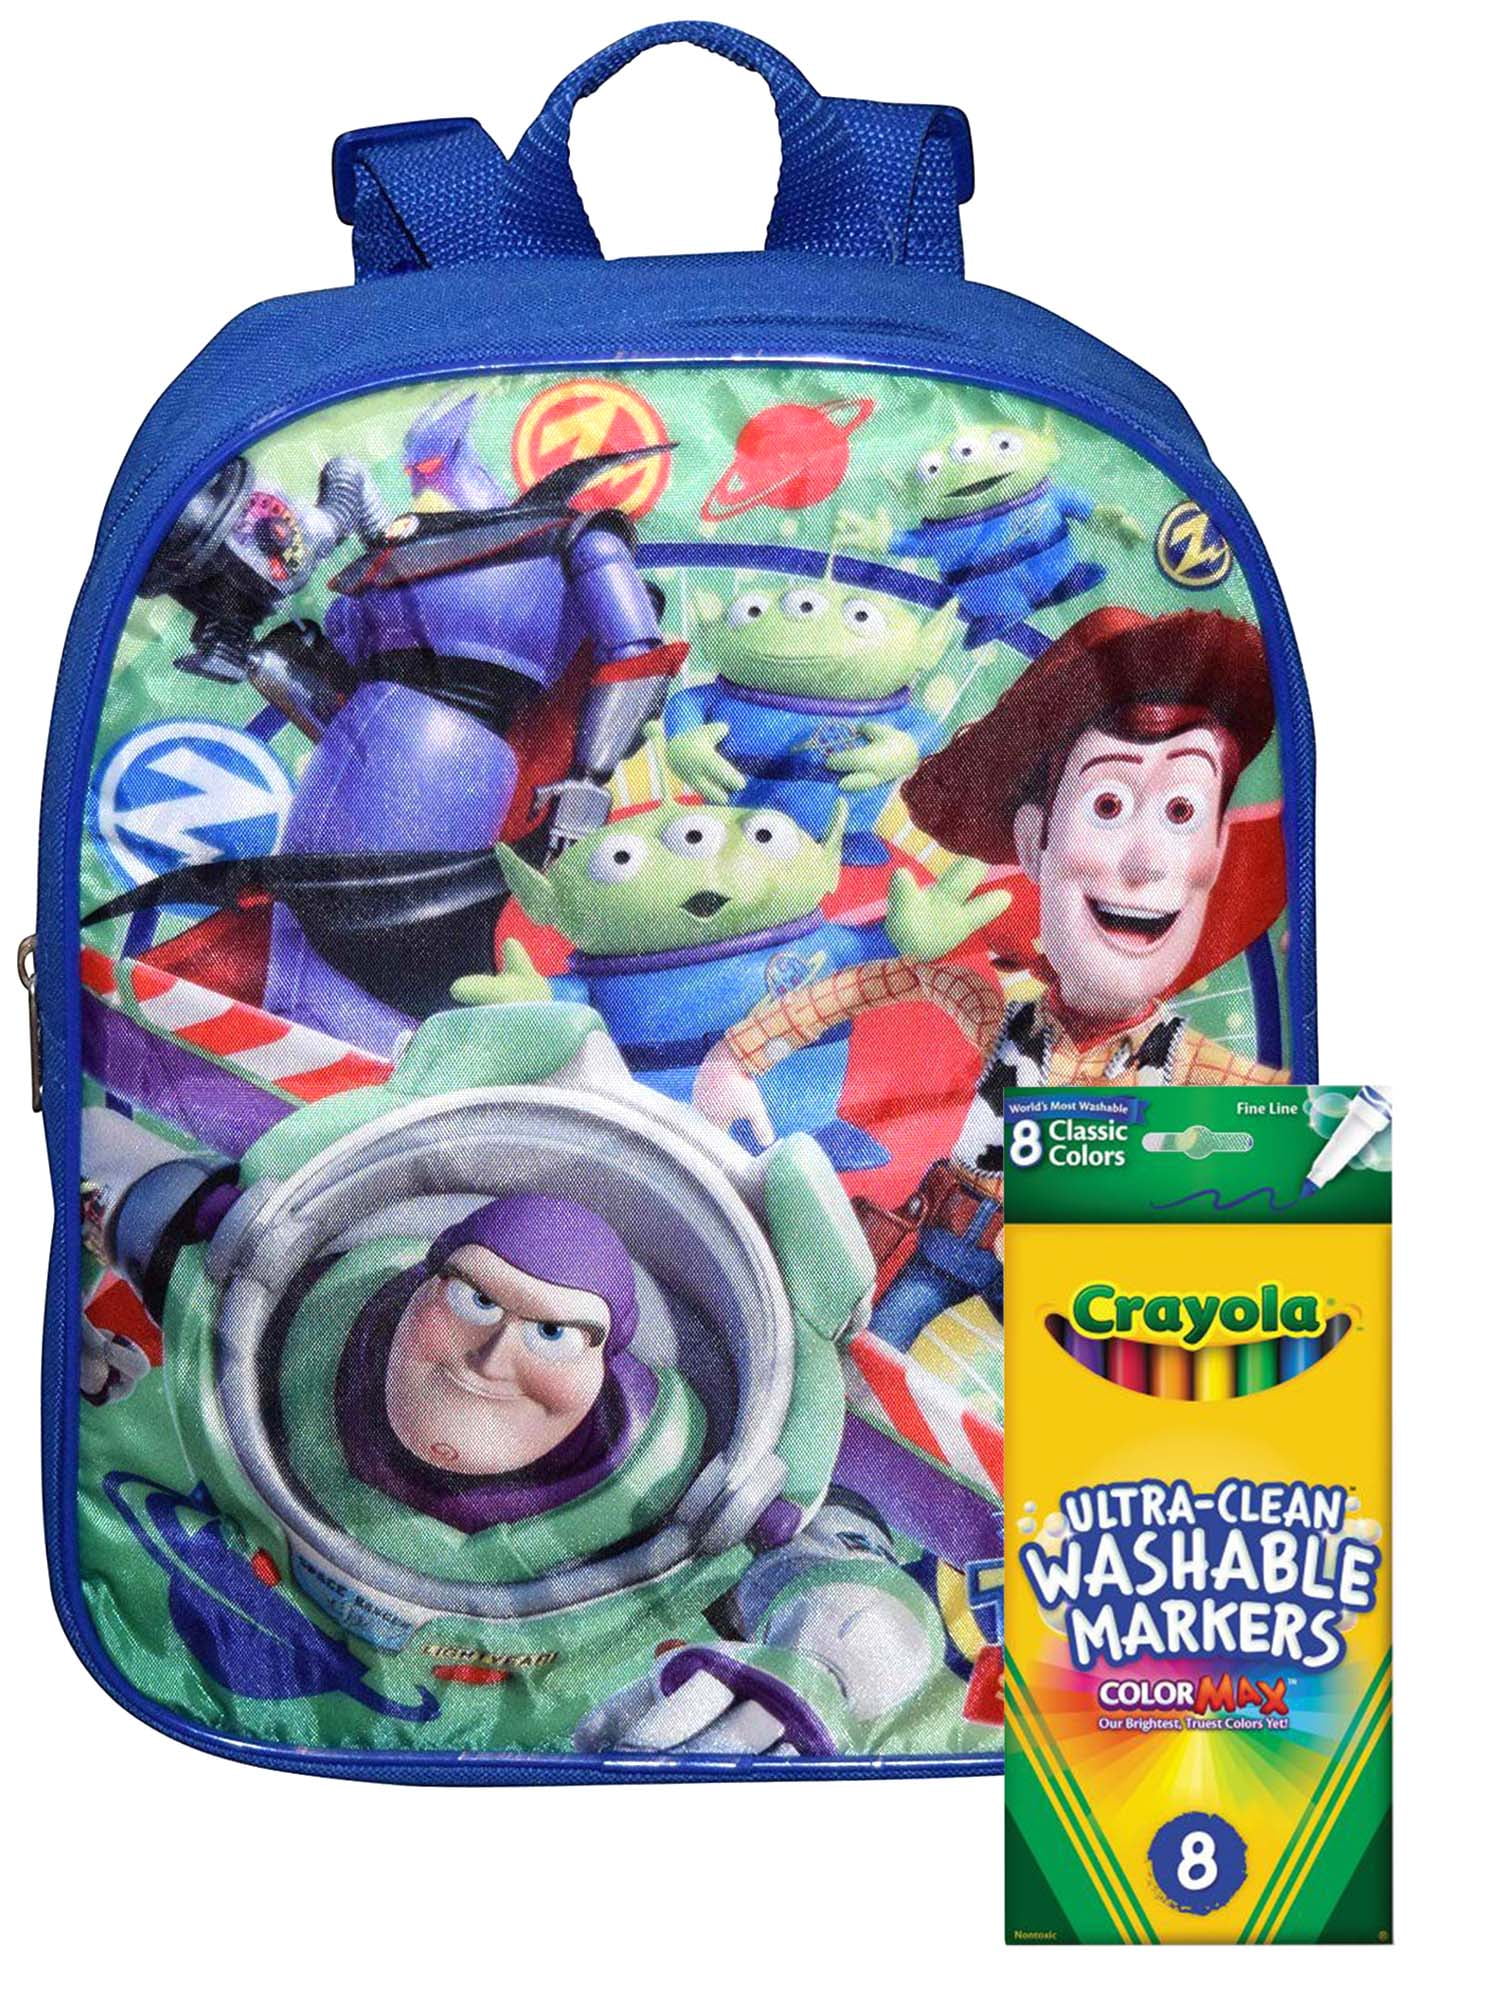 buzz lightyear mini backpack